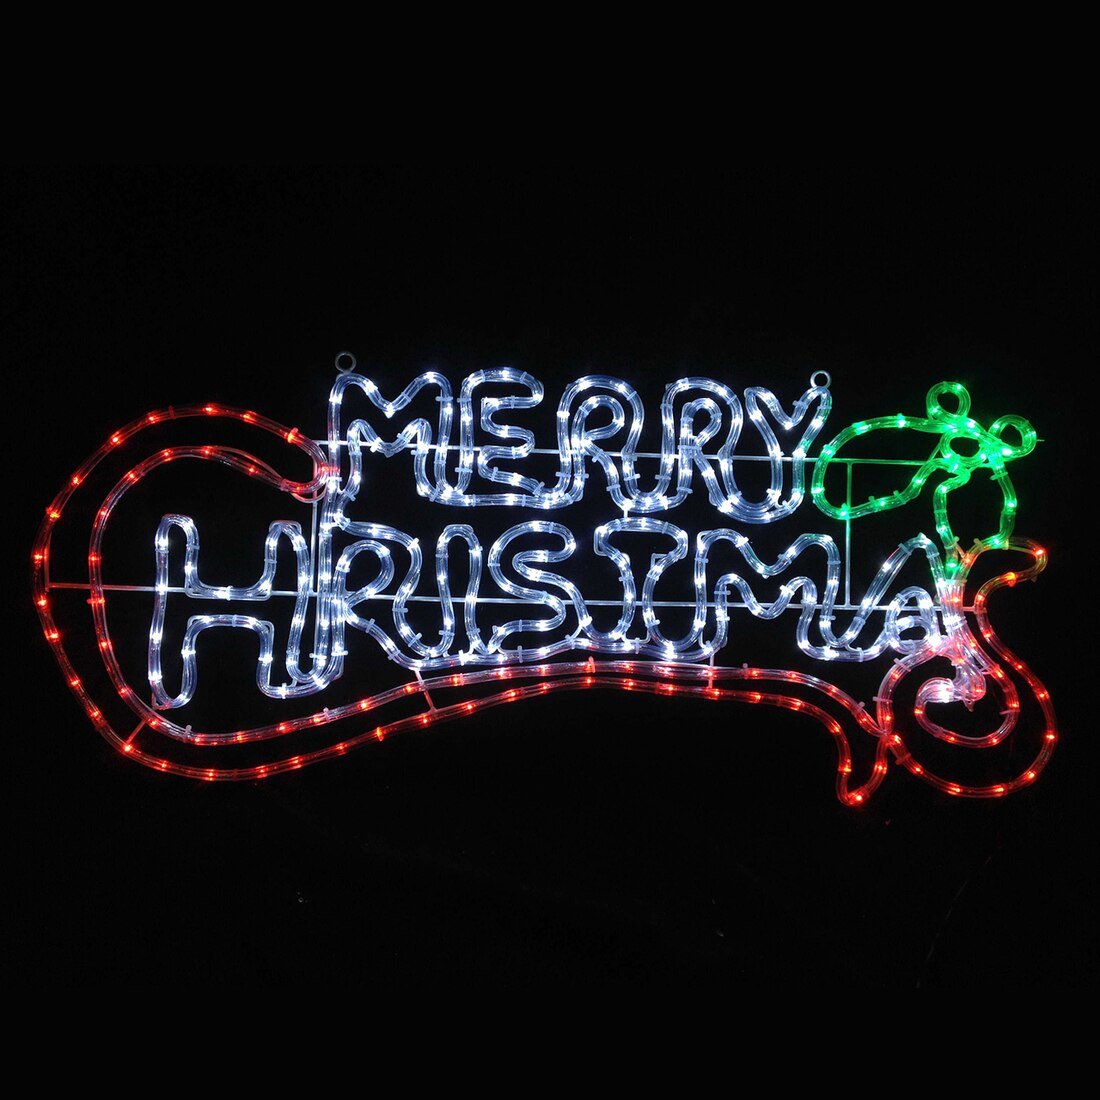 Mr Crimbo Chasing Red/Green/White LED Merry Christmas Indoor/Outdoor Rope Light Wall Sign - MrCrimbo.co.uk -XS3530 - -lights